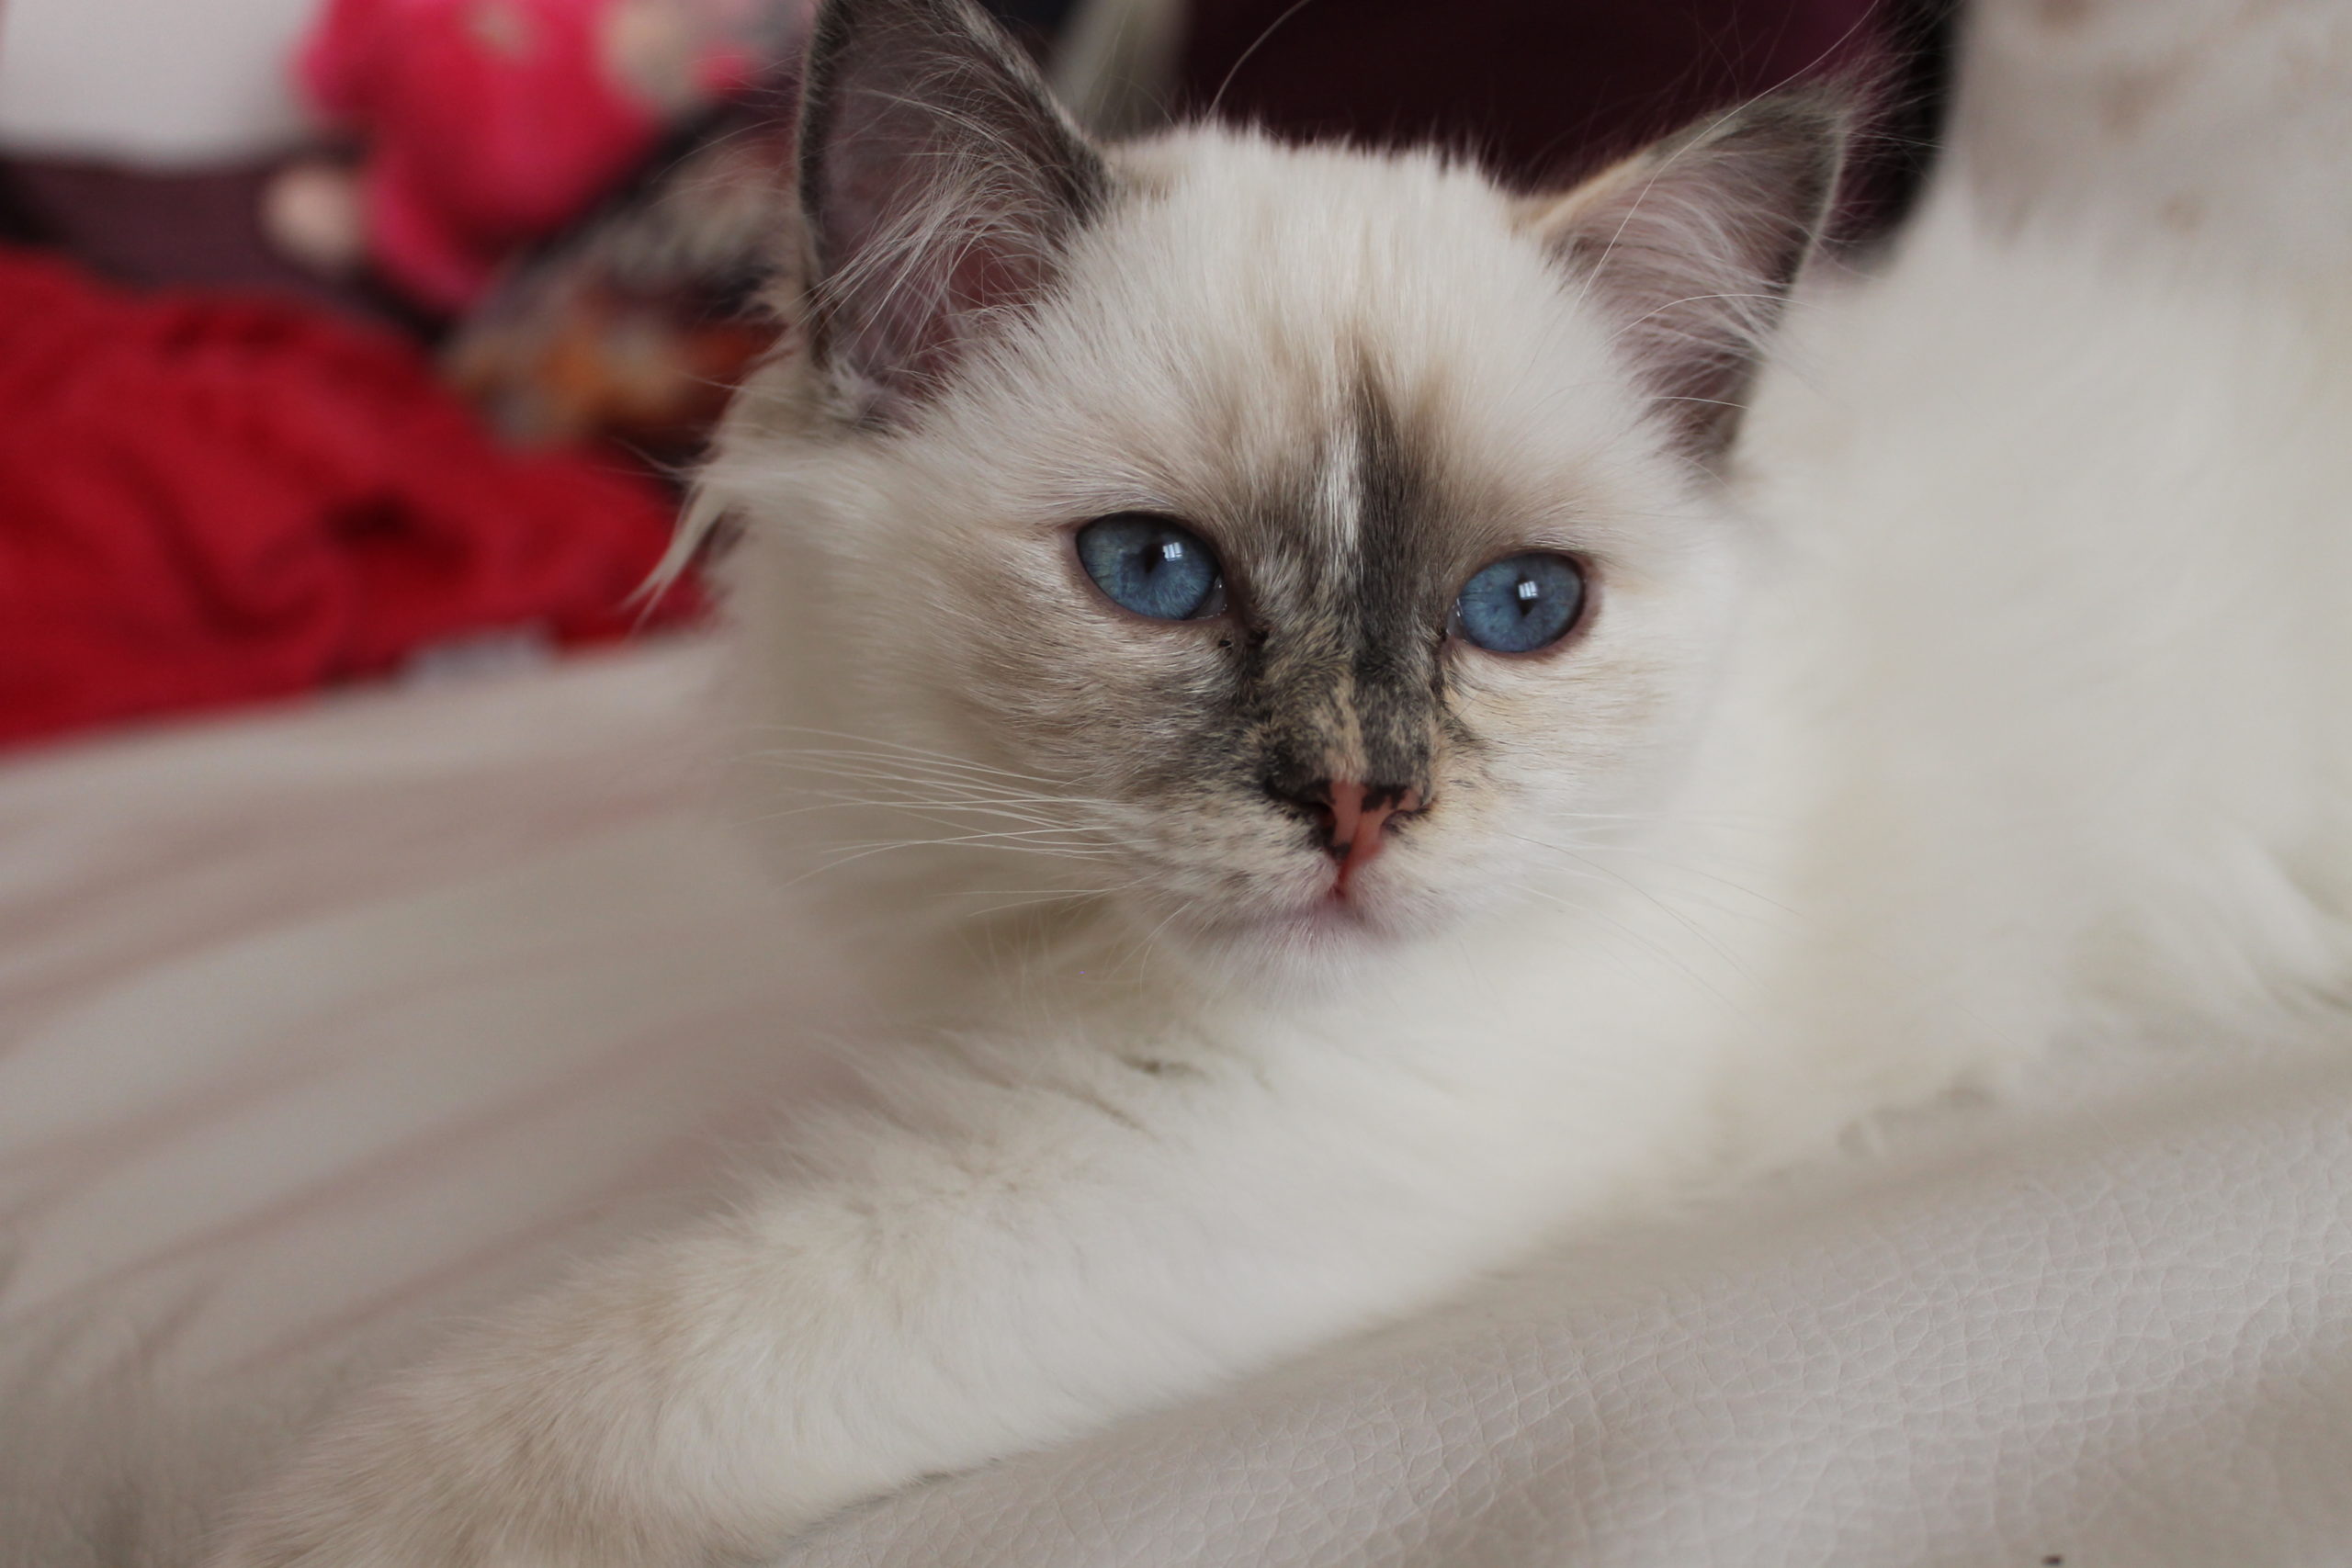 Siamese Cat For Sale In Cavite British Shorthair